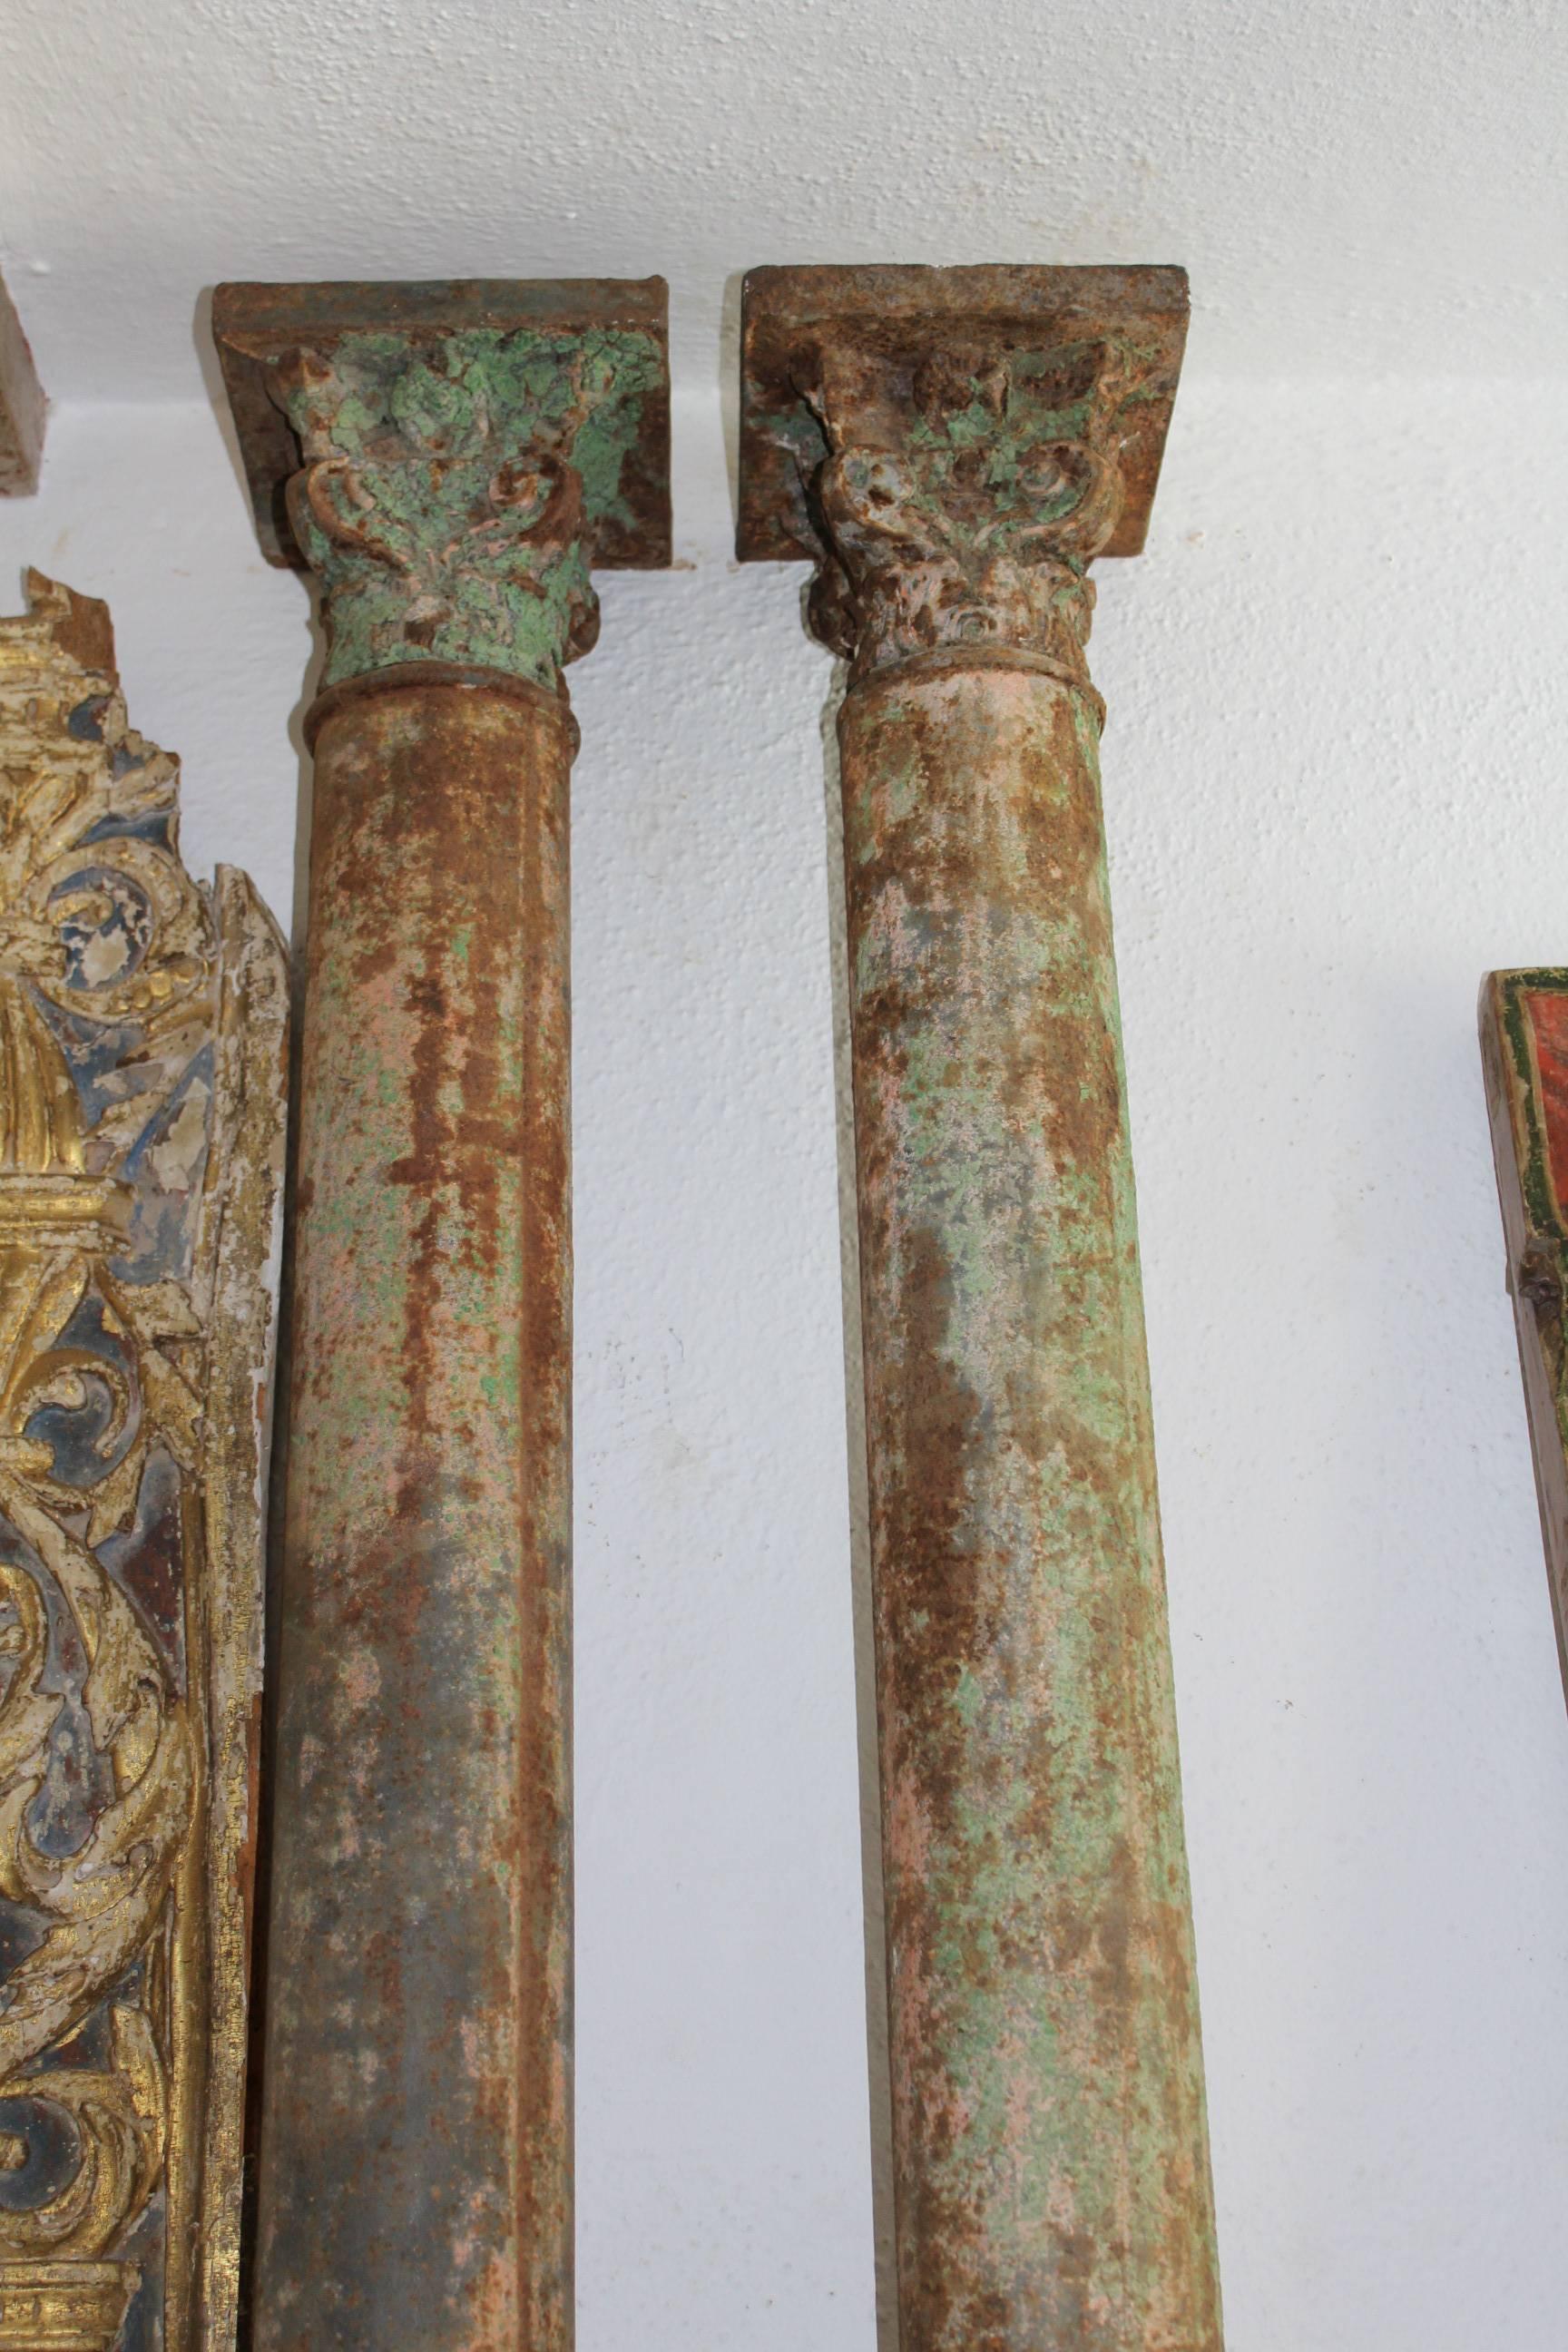 Antique 19th century Spanish cast iron Corinthian columns with their original green color.